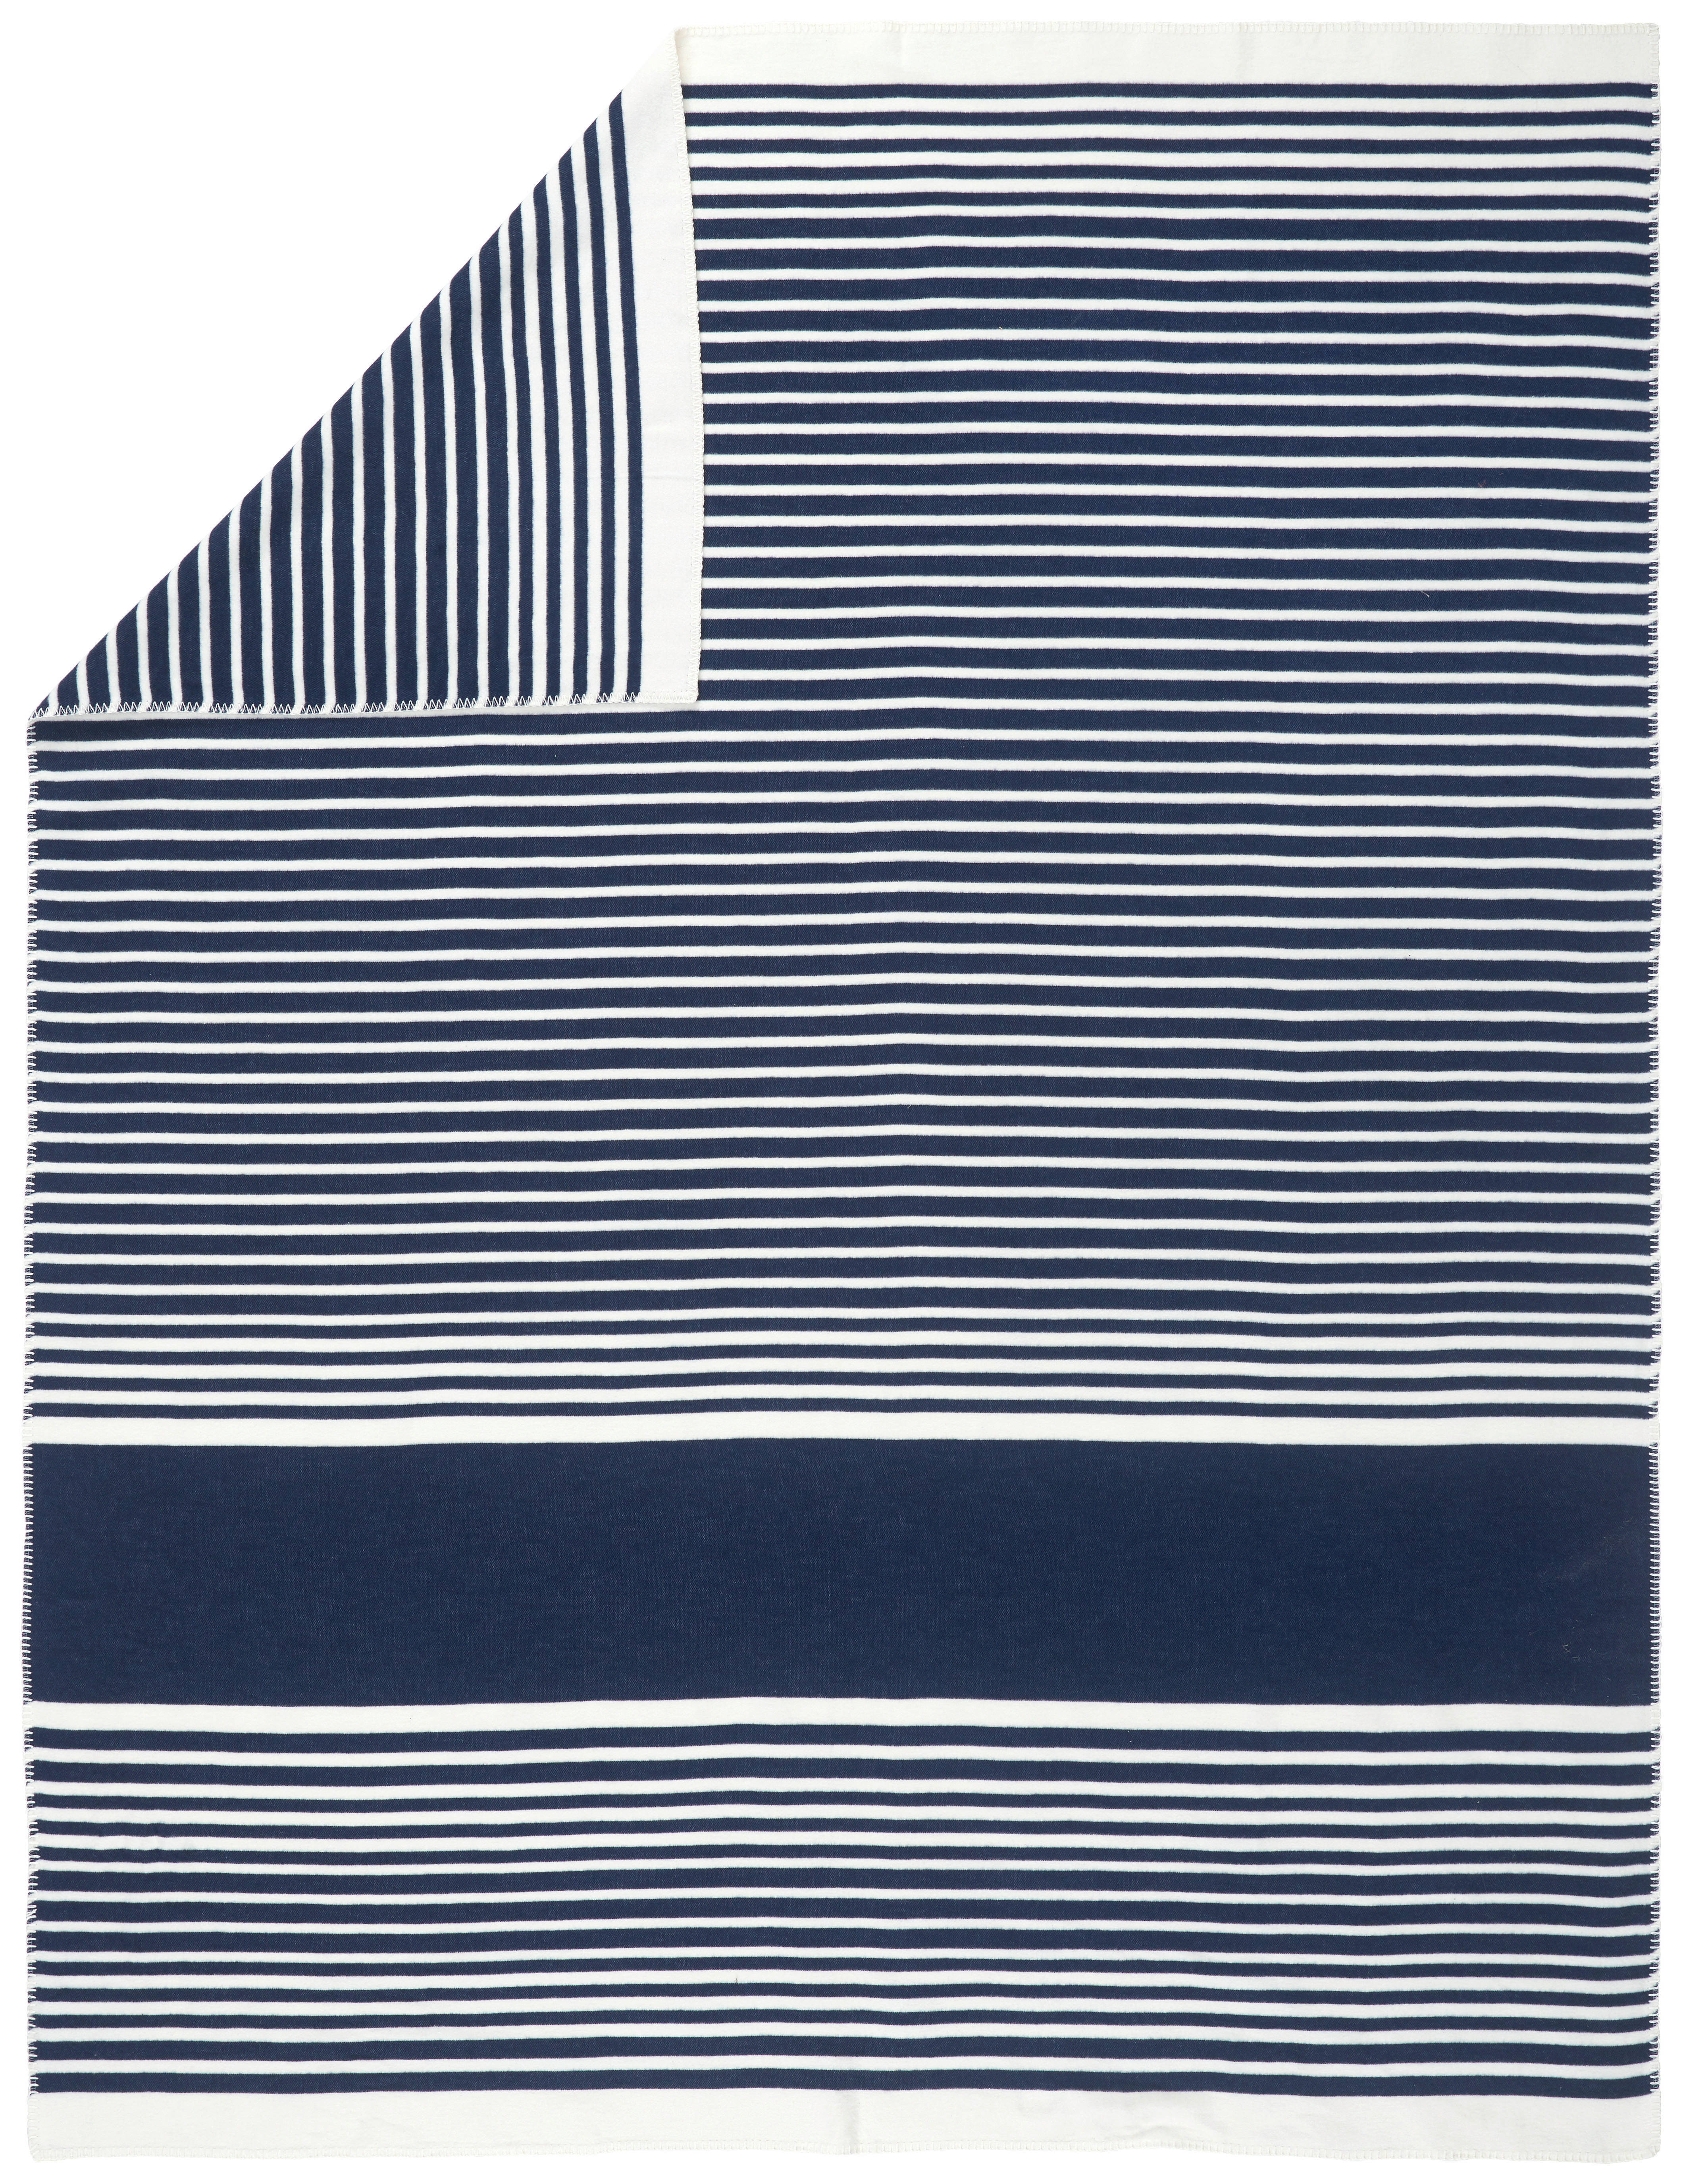 PLAID 150/200 cm  - Blau/Weiß, Design, Textil (150/200cm) - Bio:Vio